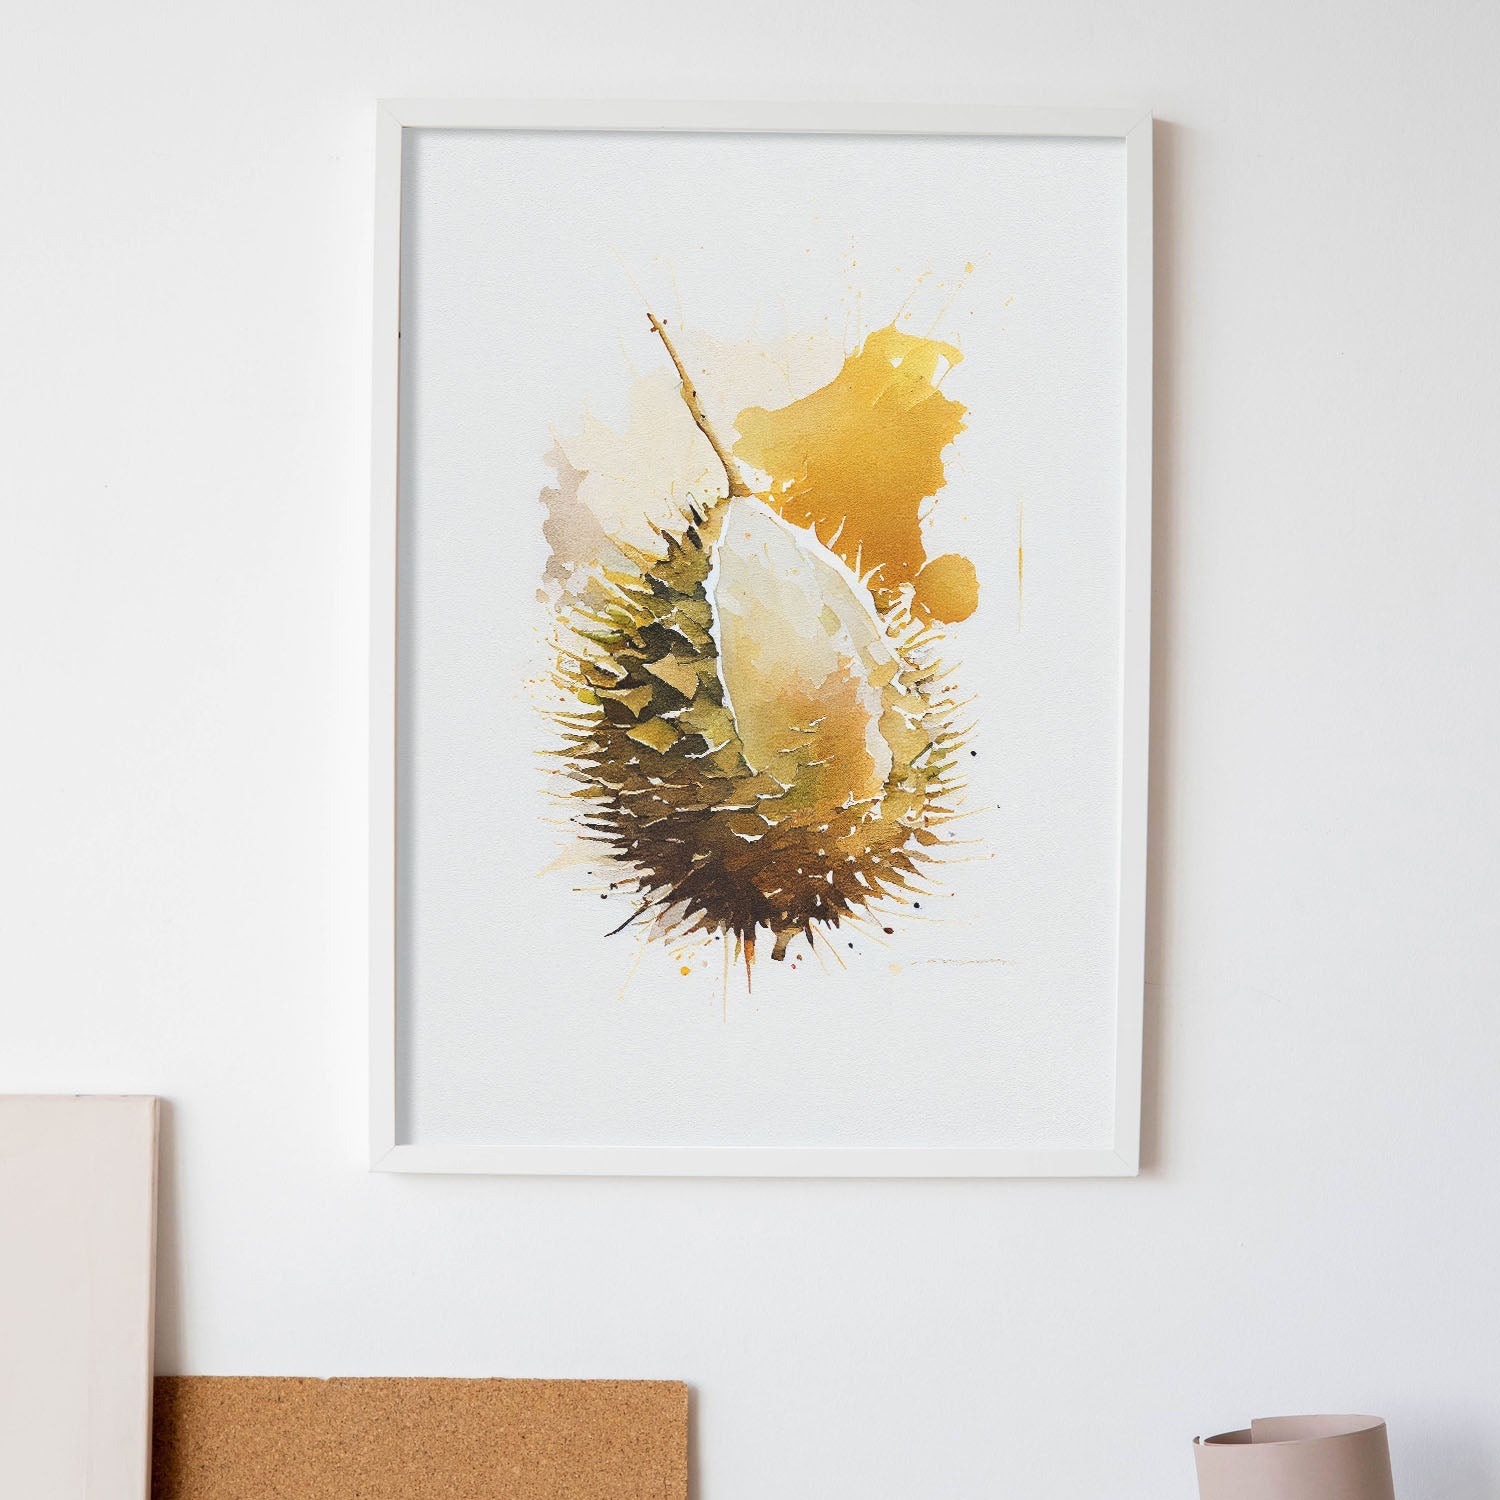 Nacnic minimalist Durian. Aesthetic Wall Art Prints for Bedroom or Living Room Design.-Artwork-Nacnic-A4-Sin Marco-Nacnic Estudio SL